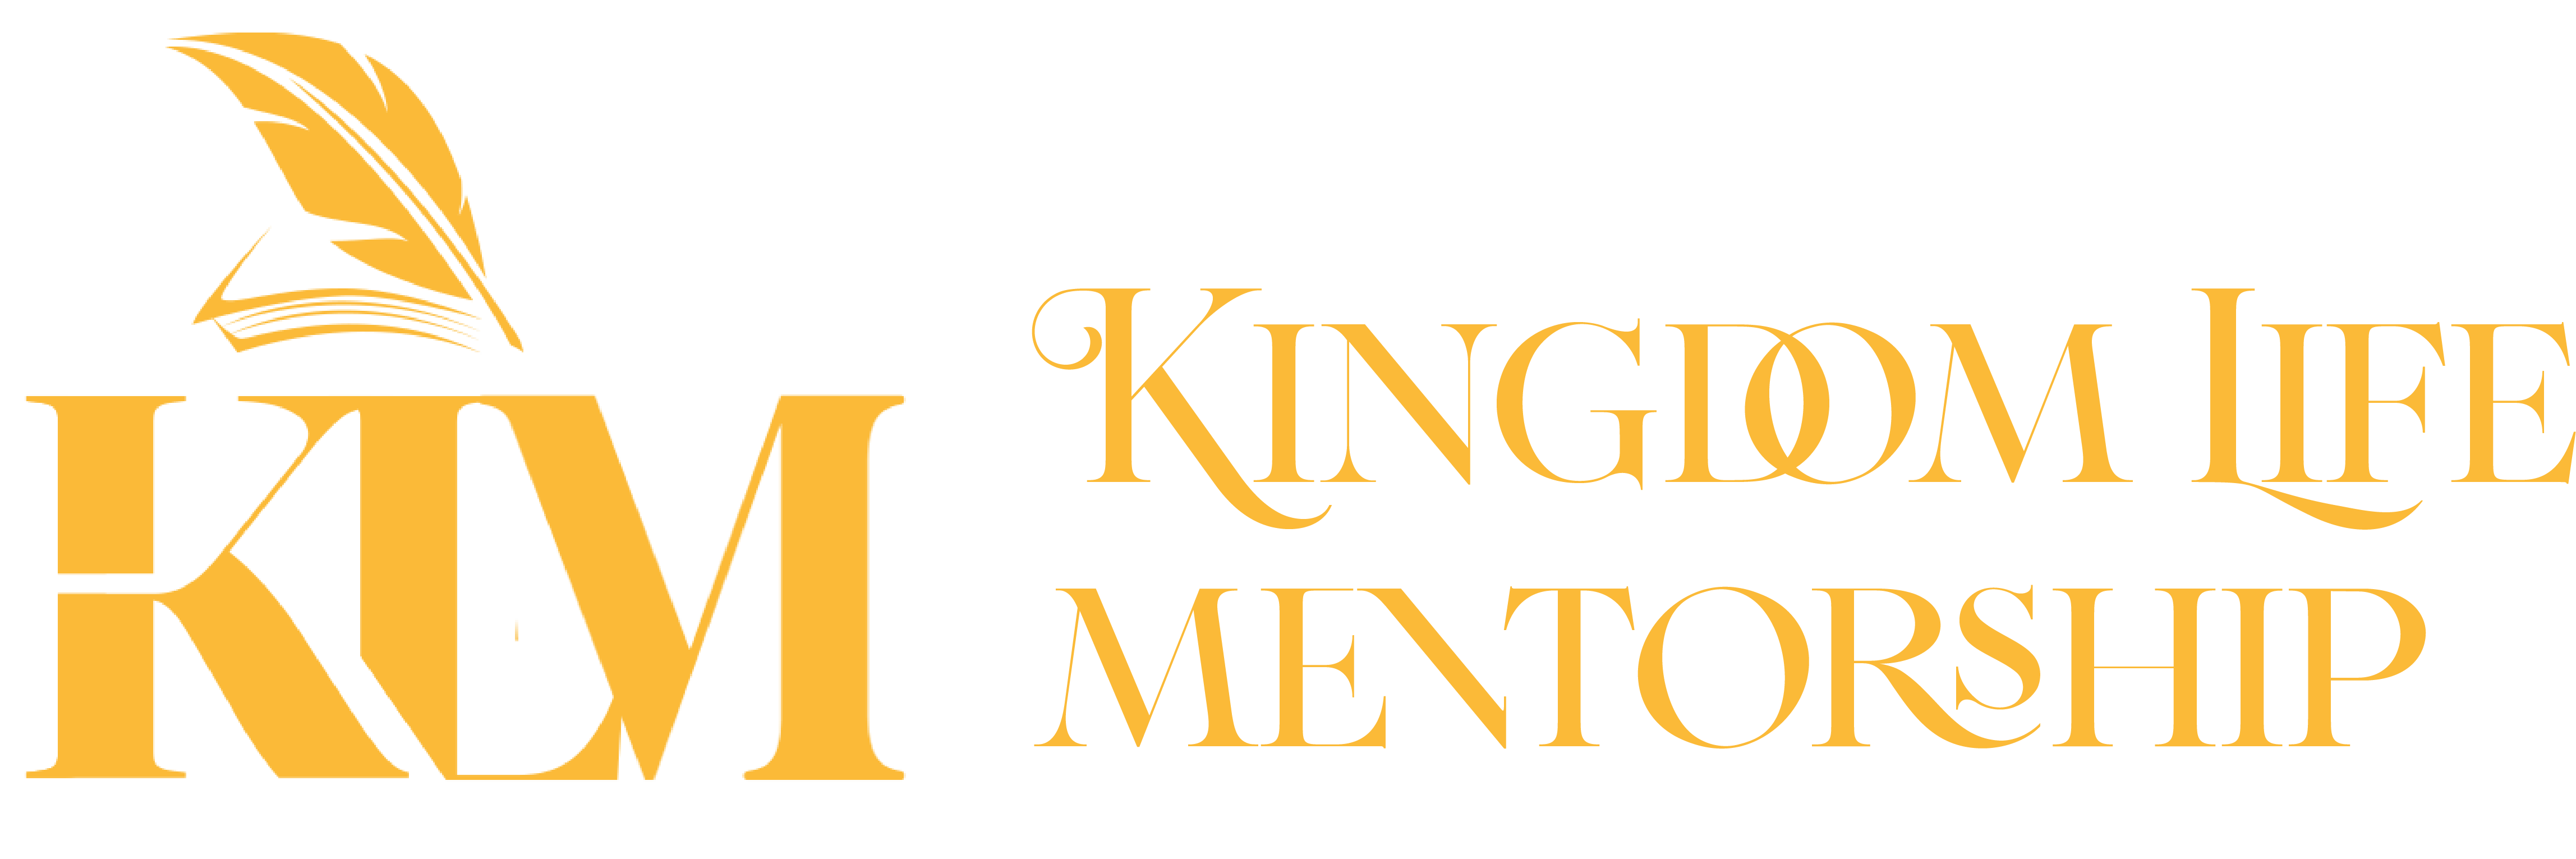 Kingdom Life Mentorship